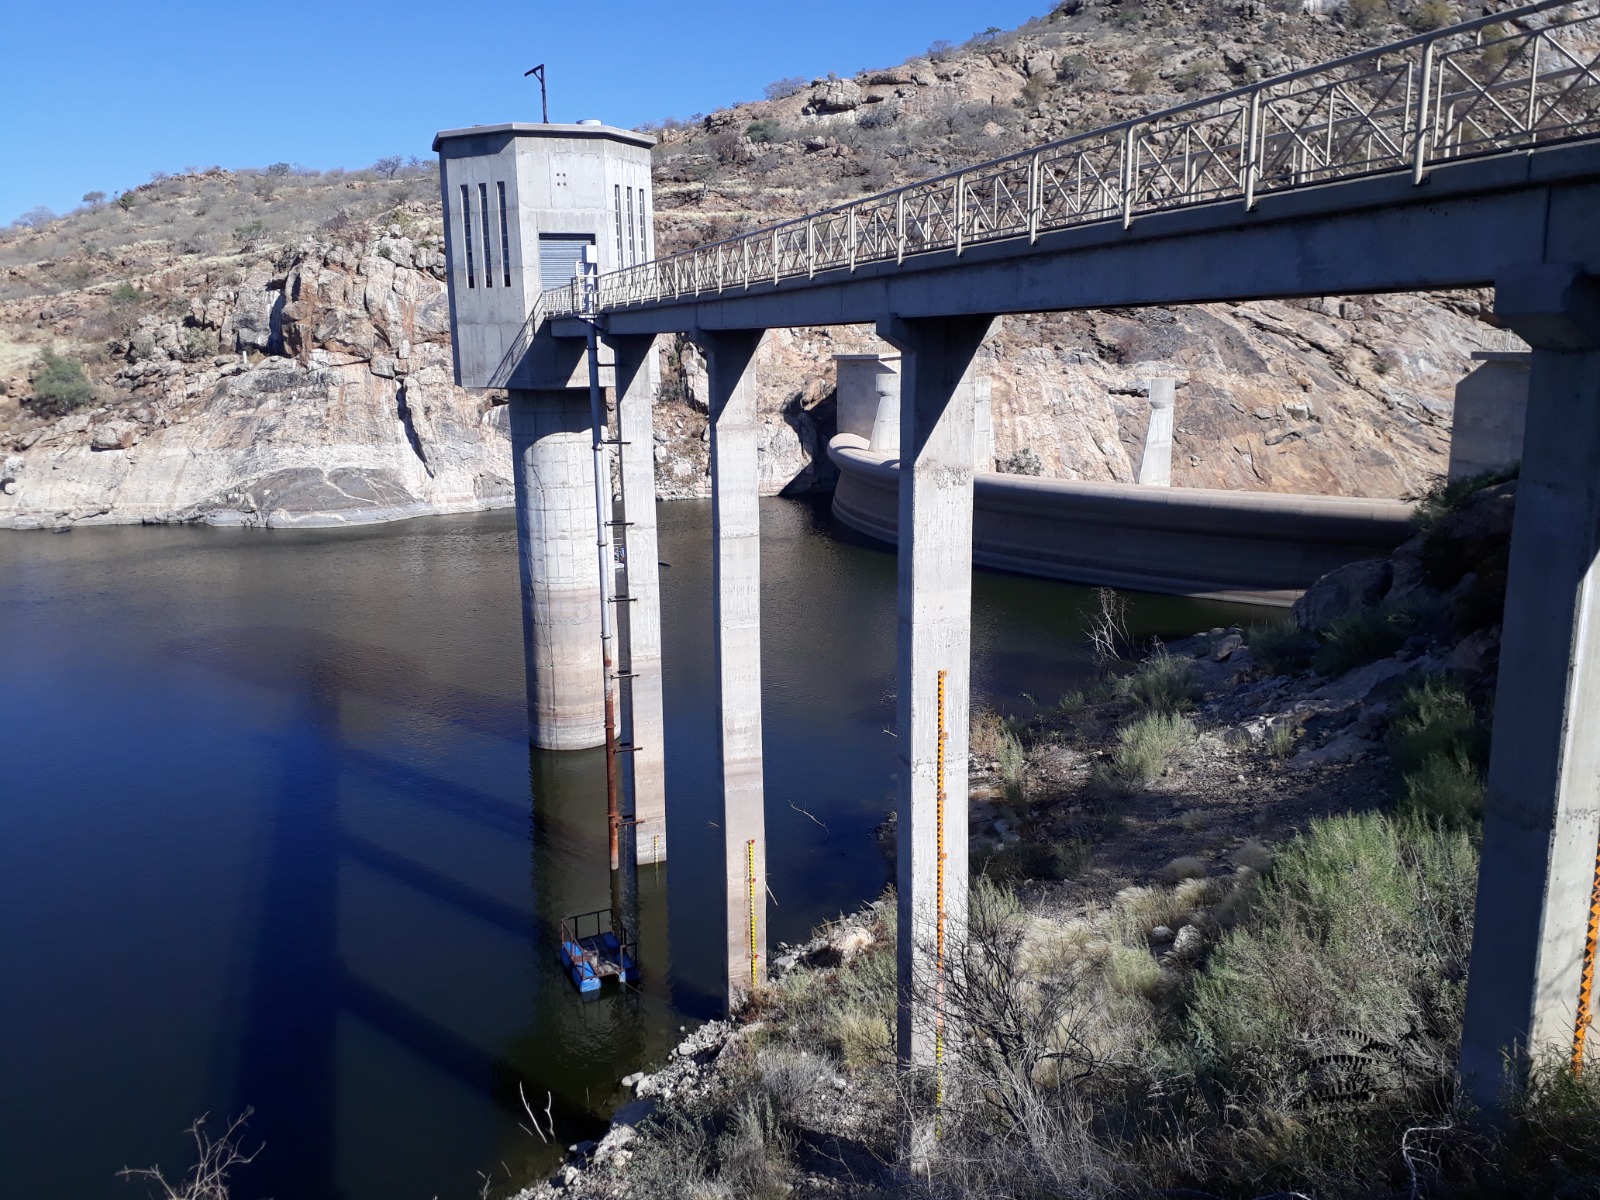 Swakoppoort dam that feeds water to the town of Karibib